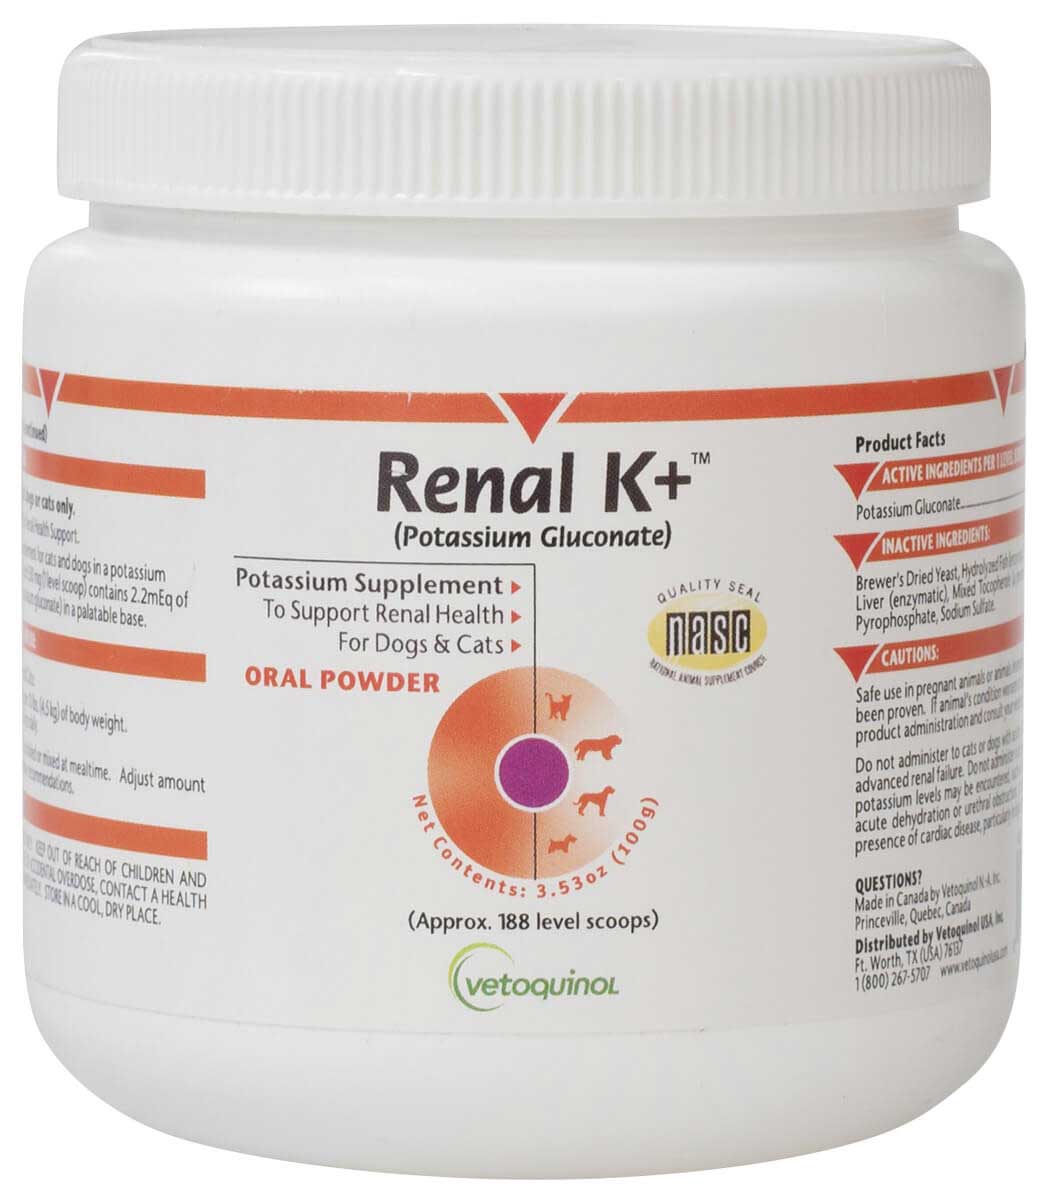 Renal K+ (Potassium Gluconate) Powder for Dogs and Cats Vetoquinol